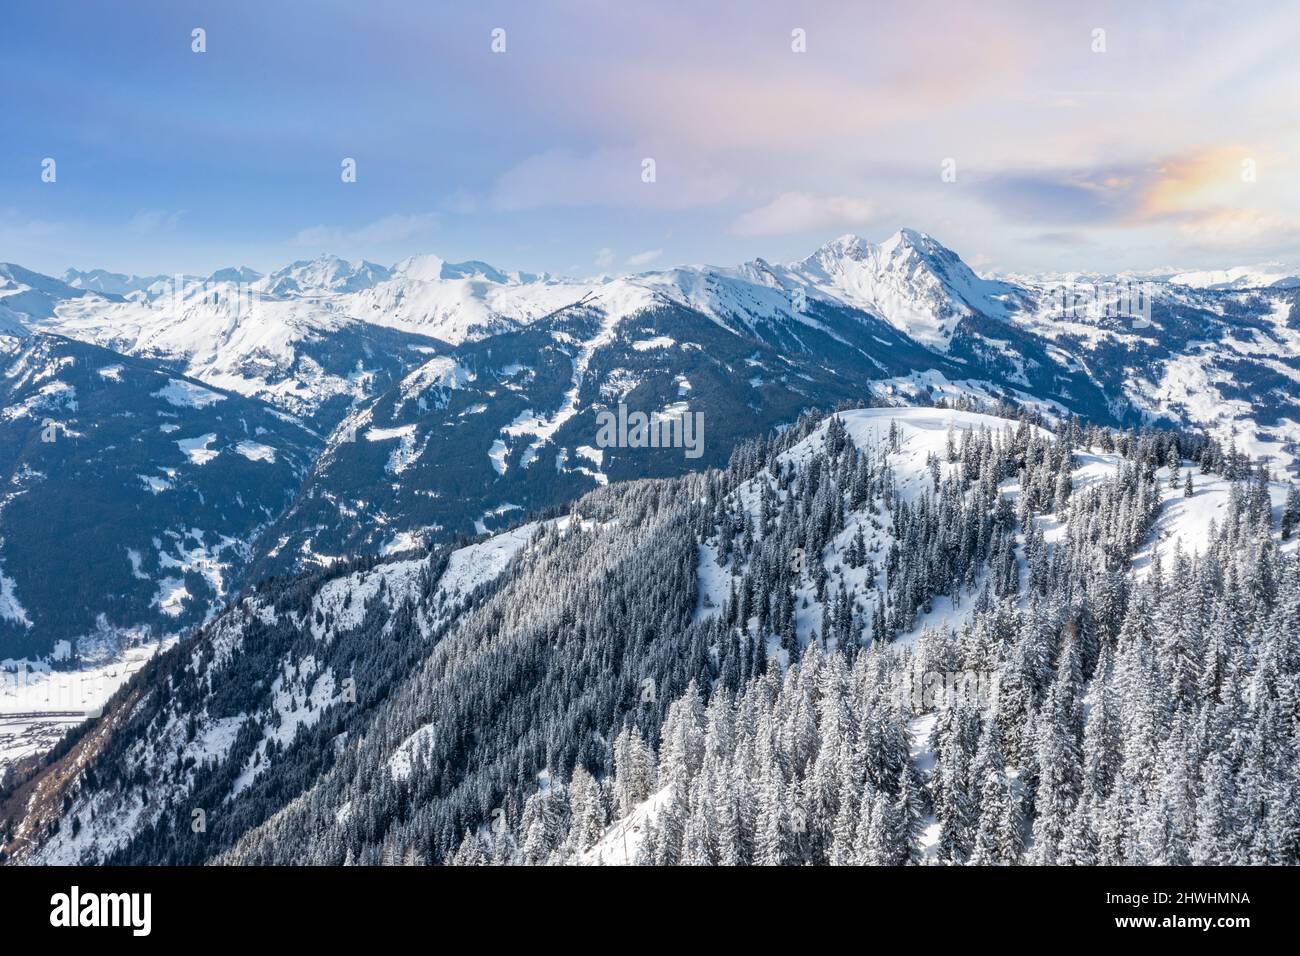 Skiing resort Grossarl and Dorfgastein. Aerial panorama view to Sladinkopf and Bernkogel mountains. Stock Photo